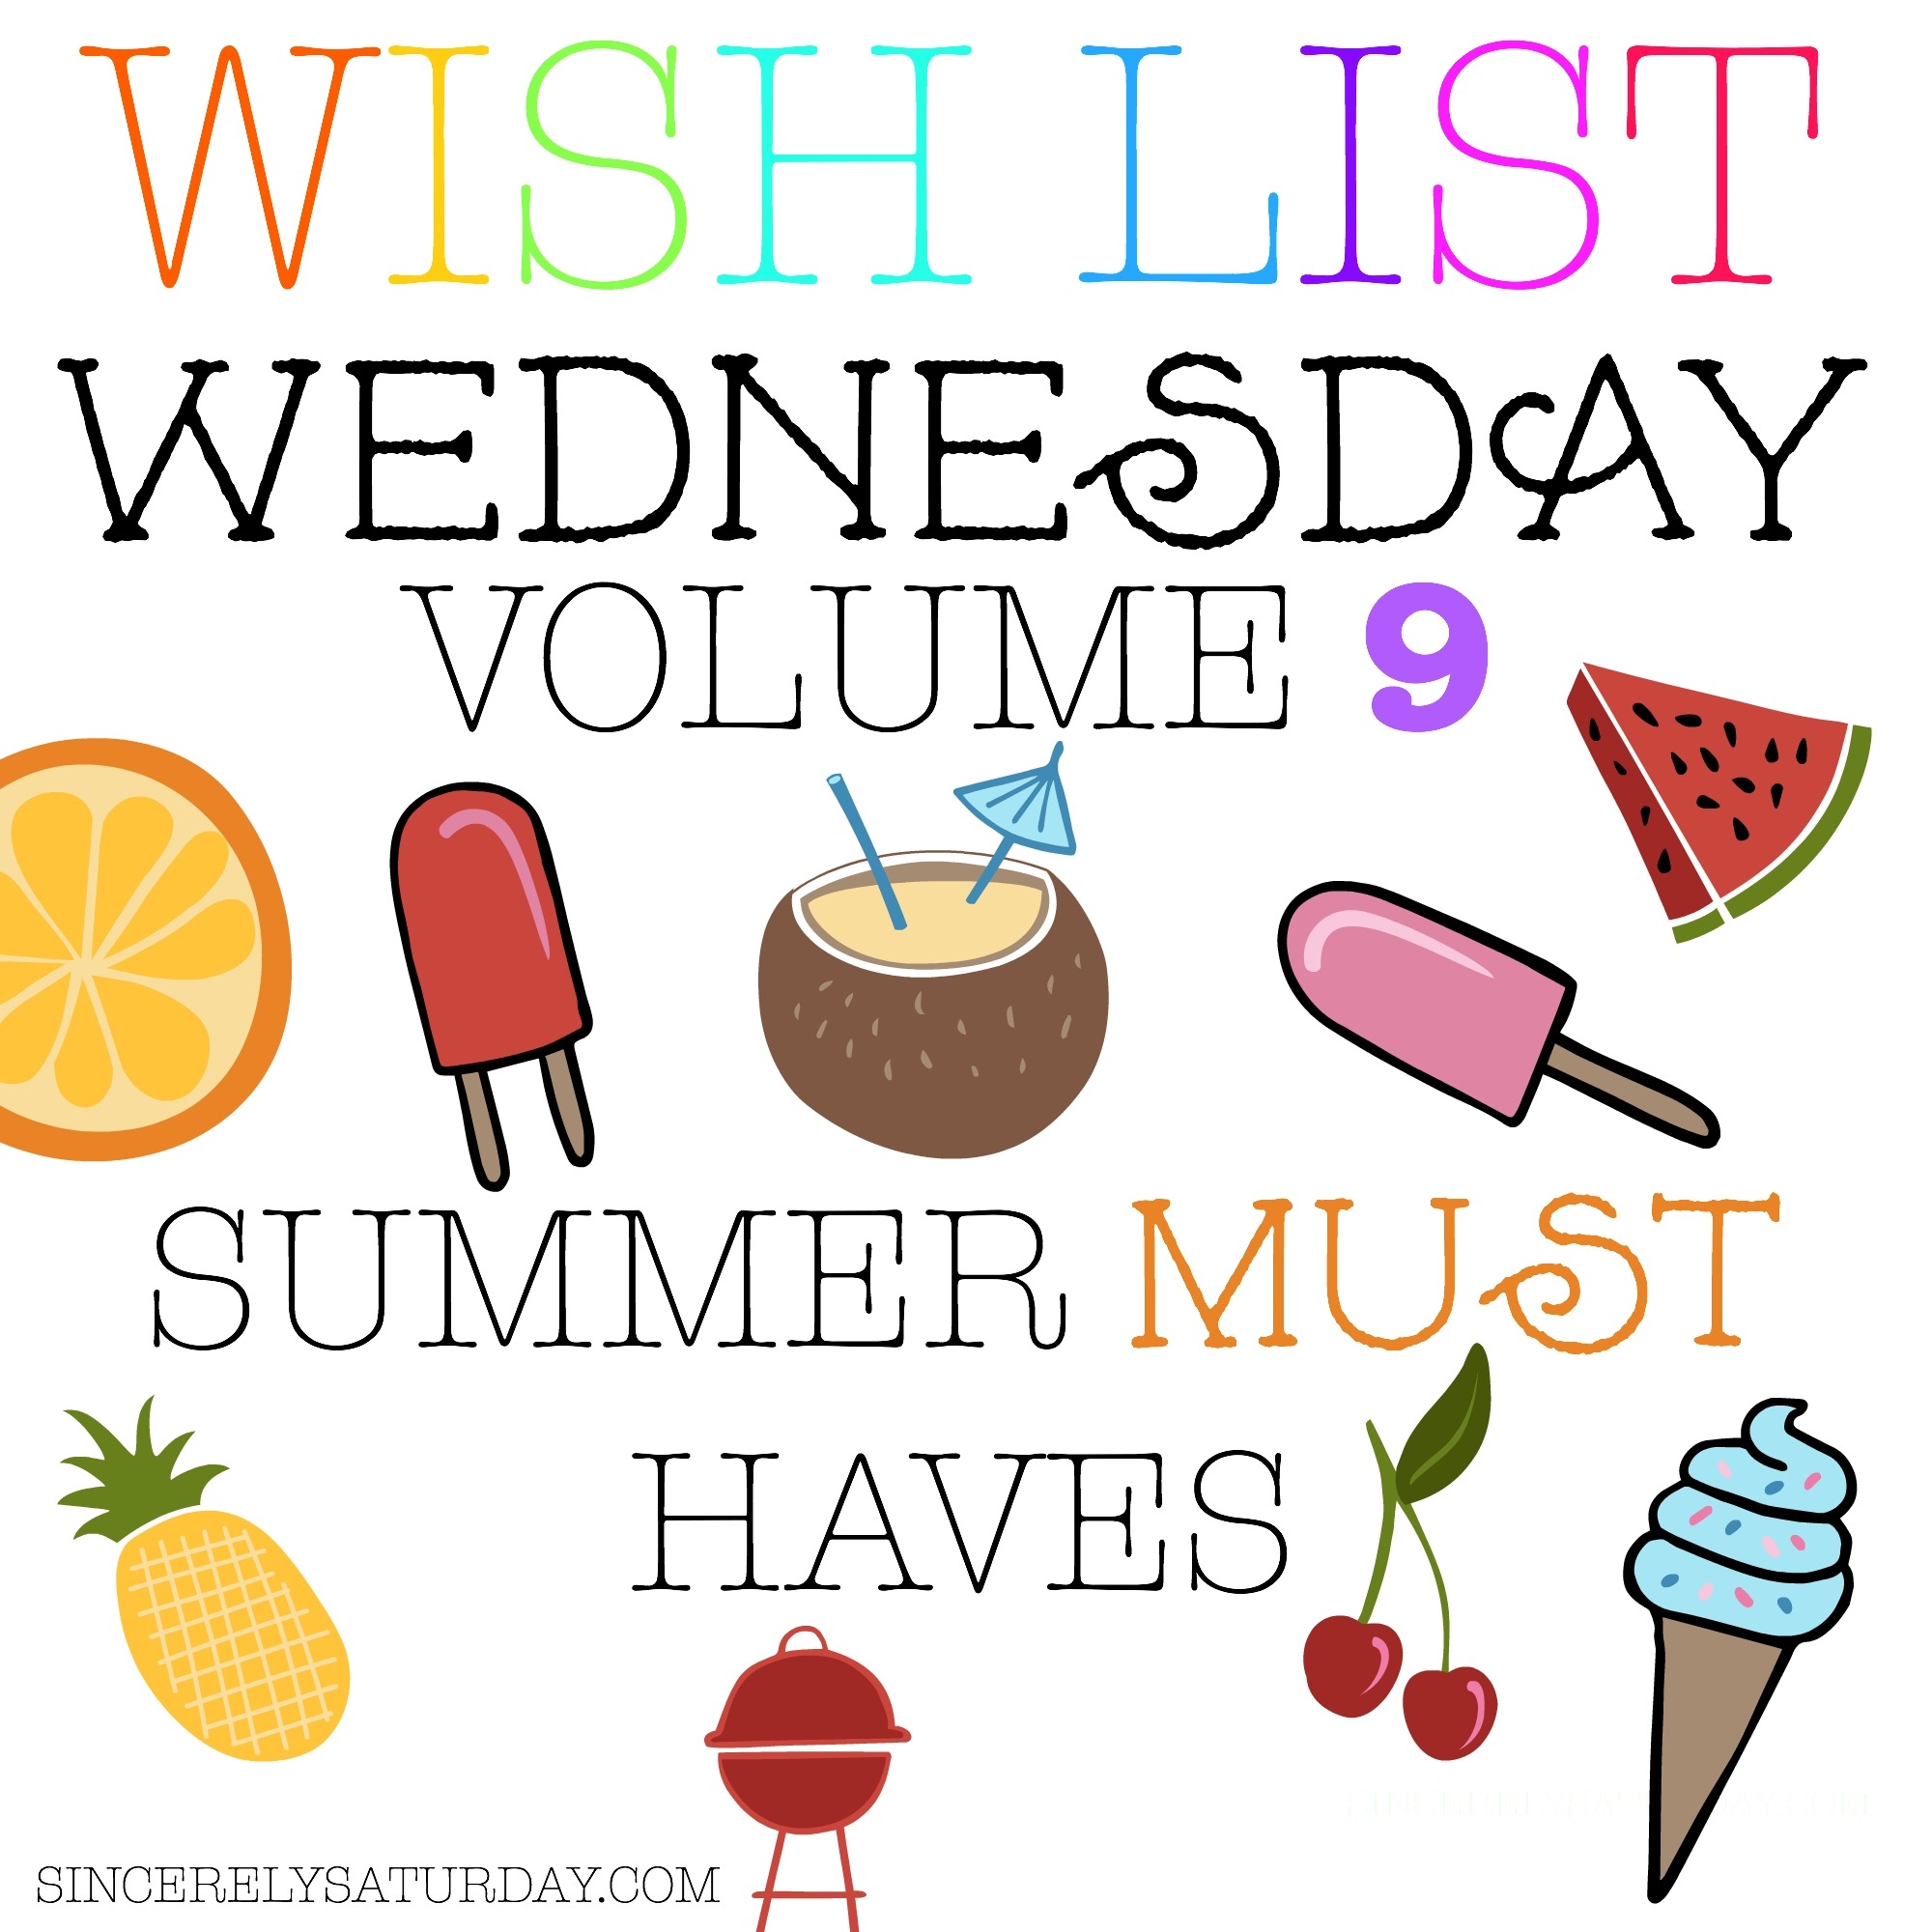 SUMMER FUN MUST HAVES - WISH LIST WEDNESDAY#9